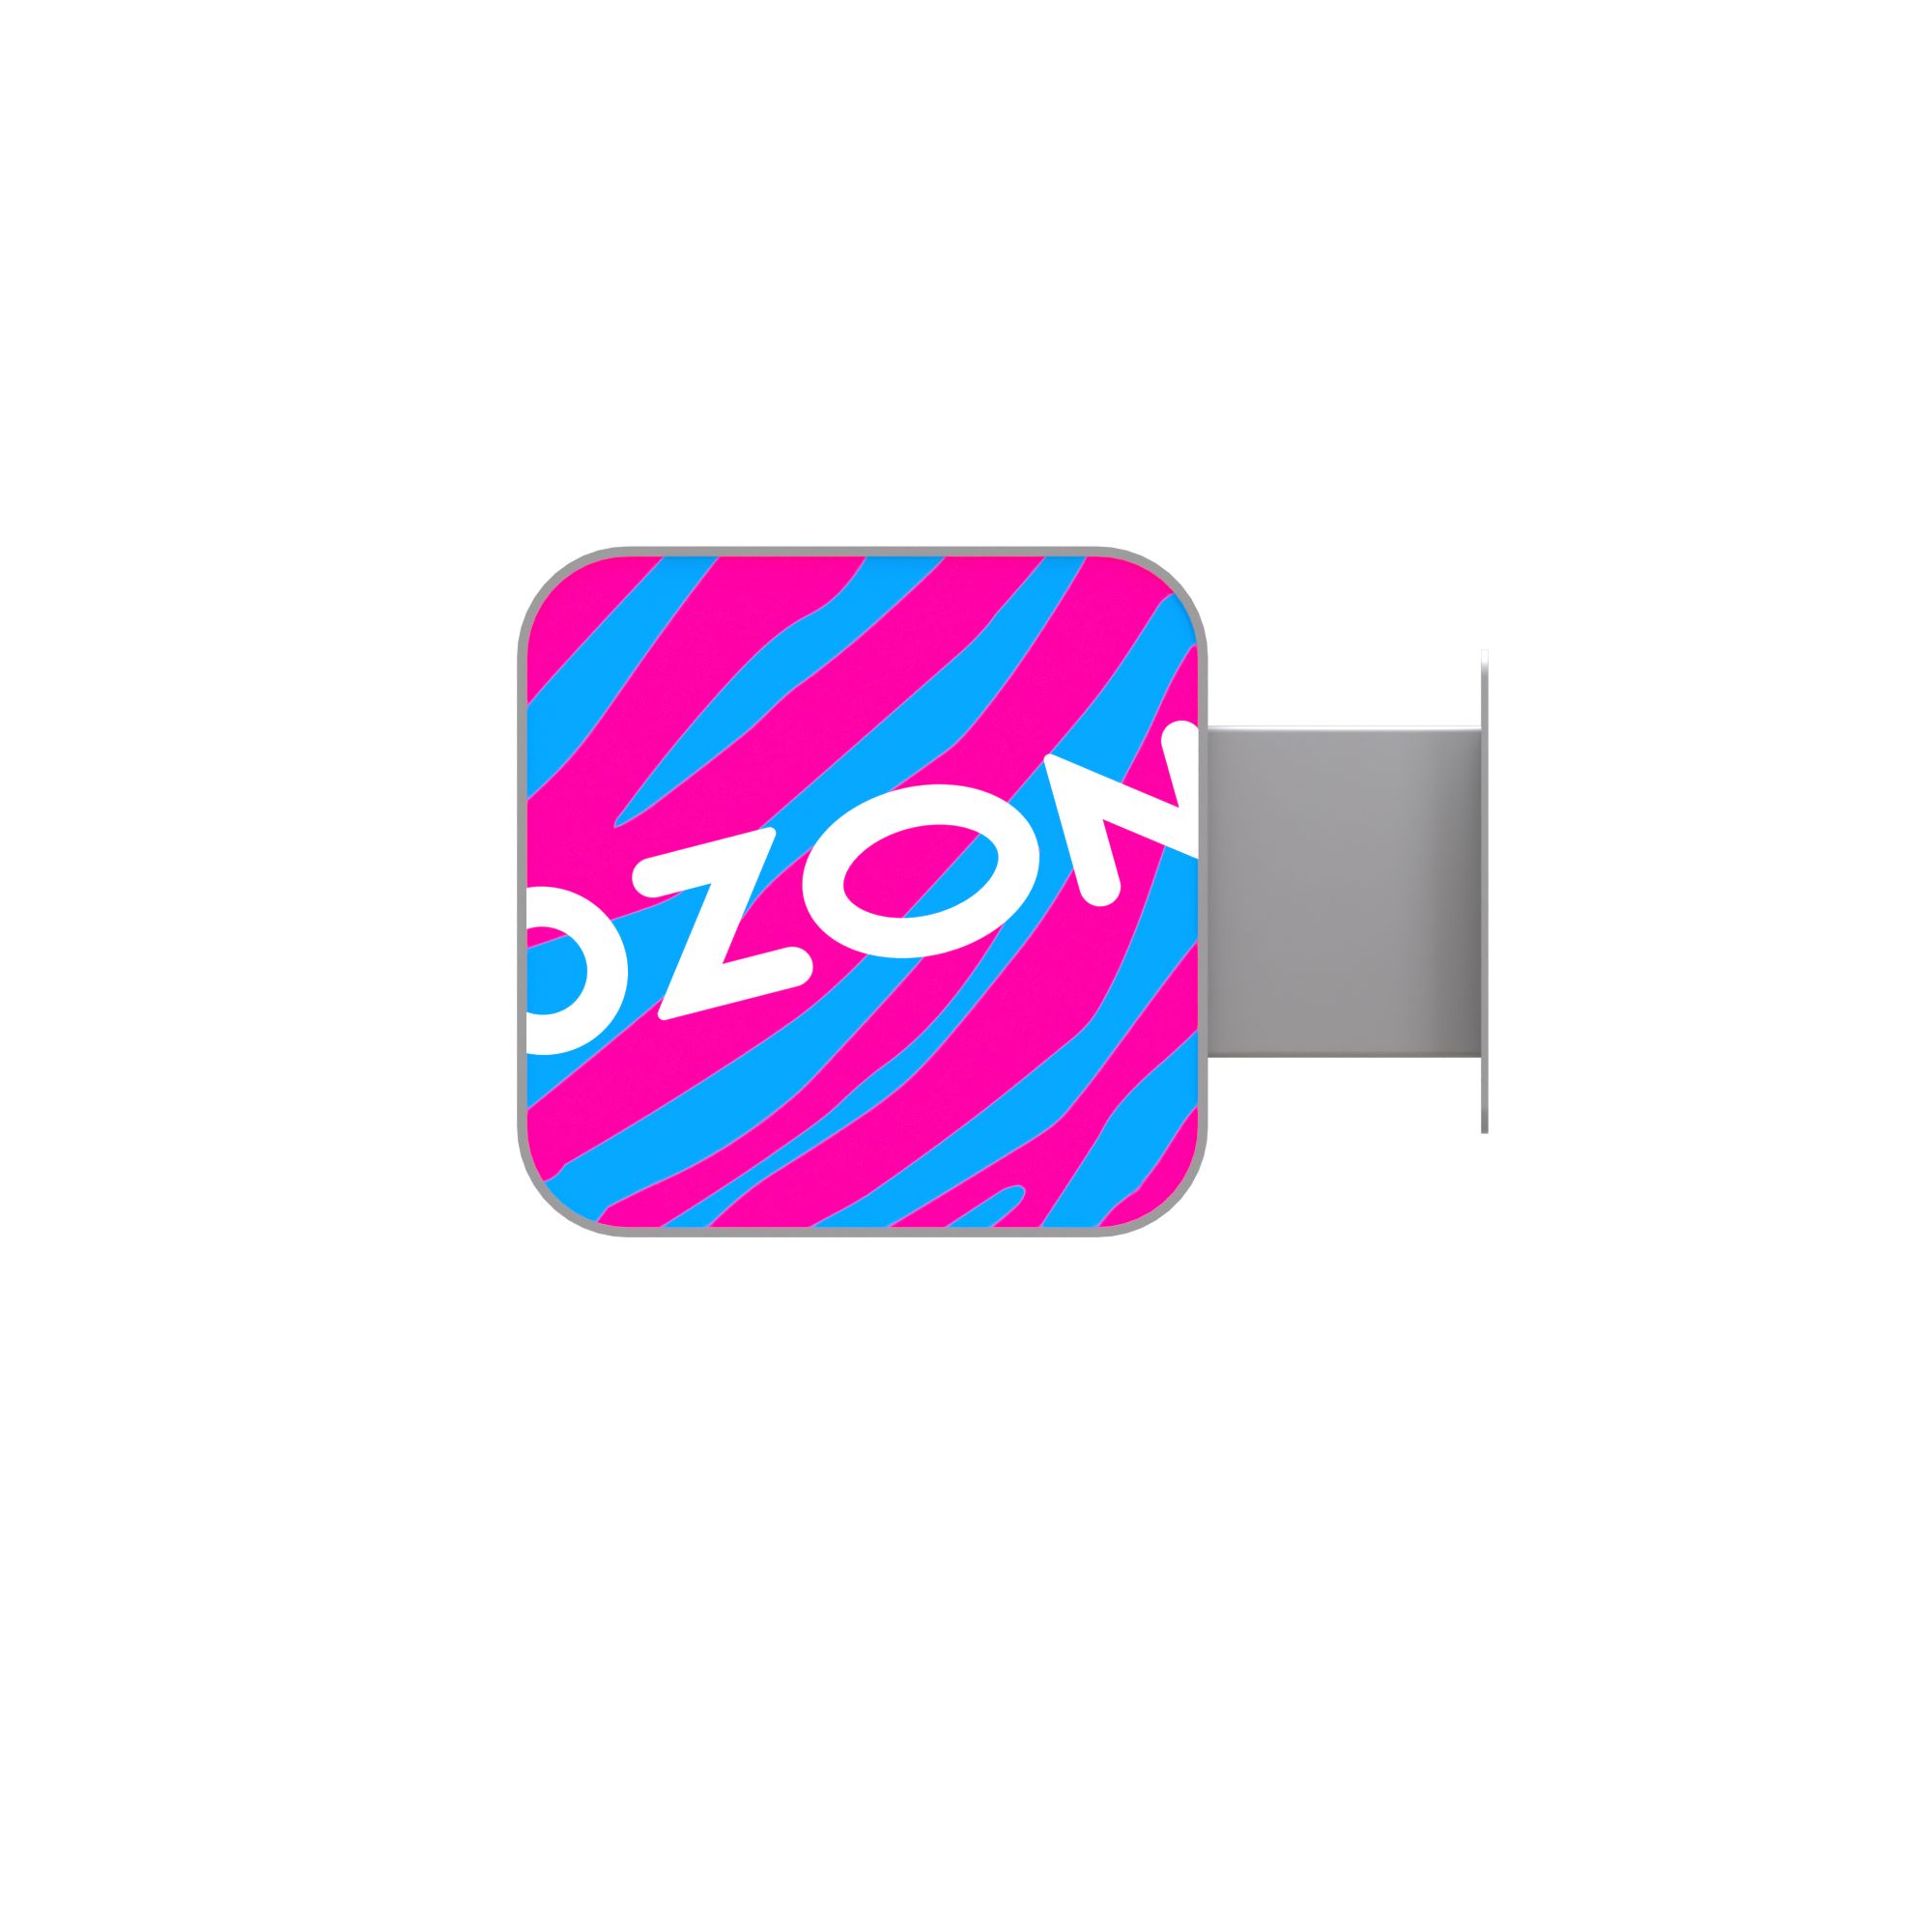 Вывеска озон зебра. Панель кронштейн OZON. Панель кронштейн Озон Зебра. Кронштейн Озон вывеска. Озон лого Зебра.